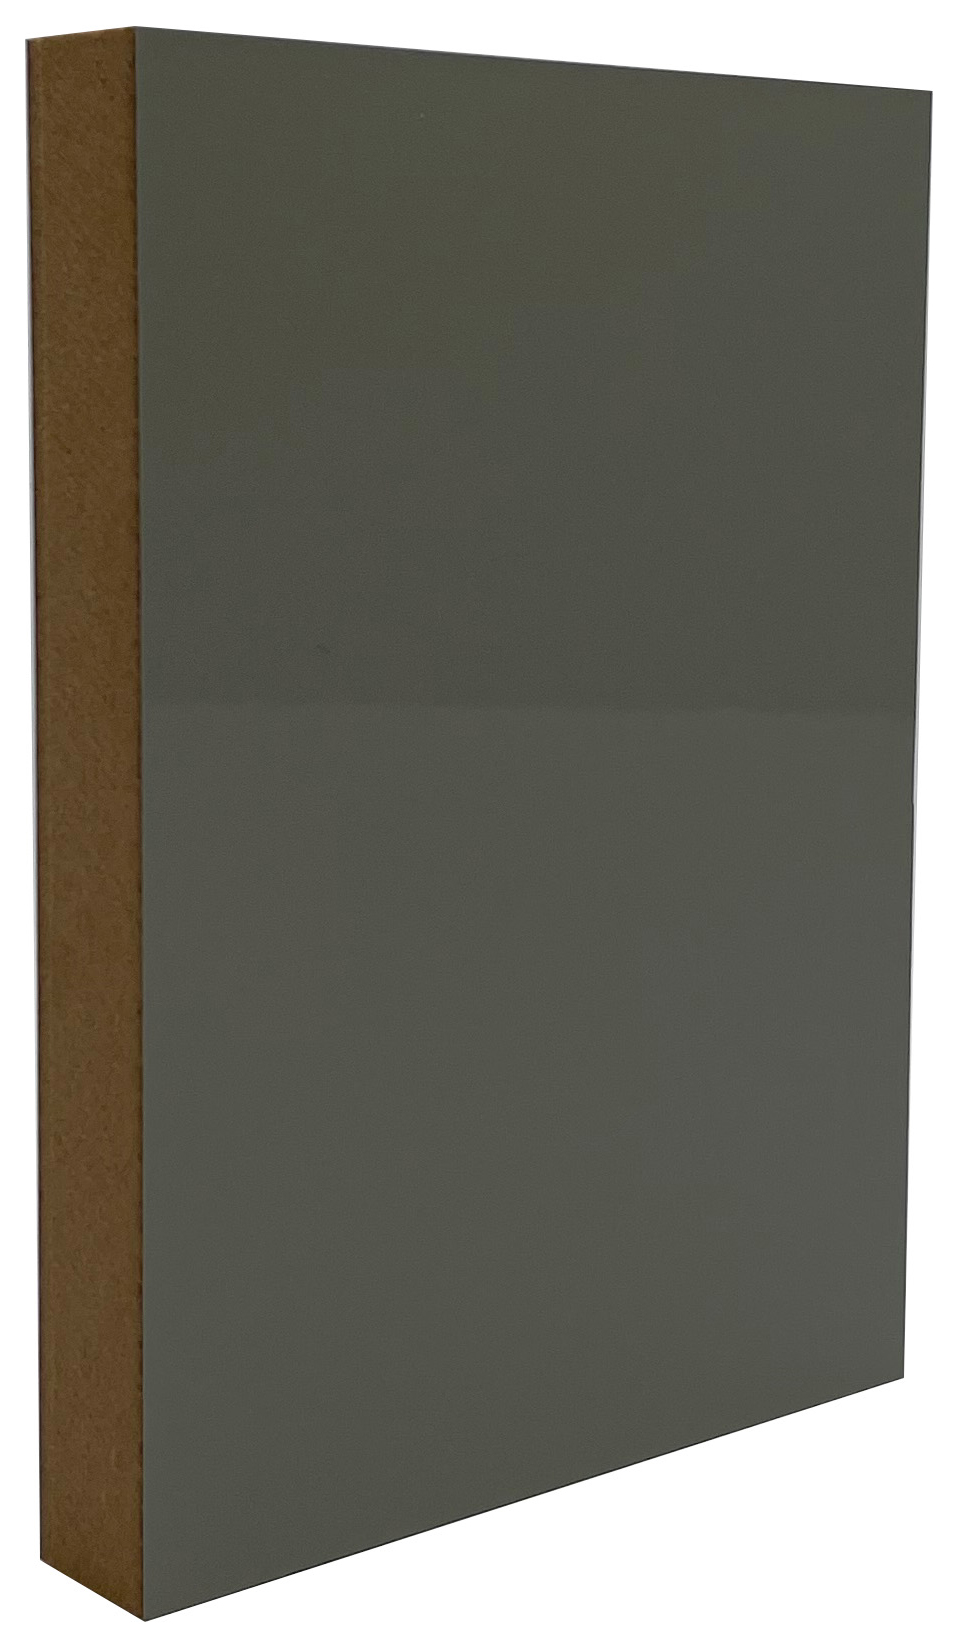 Image of Wickes Orlando/Madison Gloss Dark Grey Colour Block Sample - 148mm x 105mm x 18mm